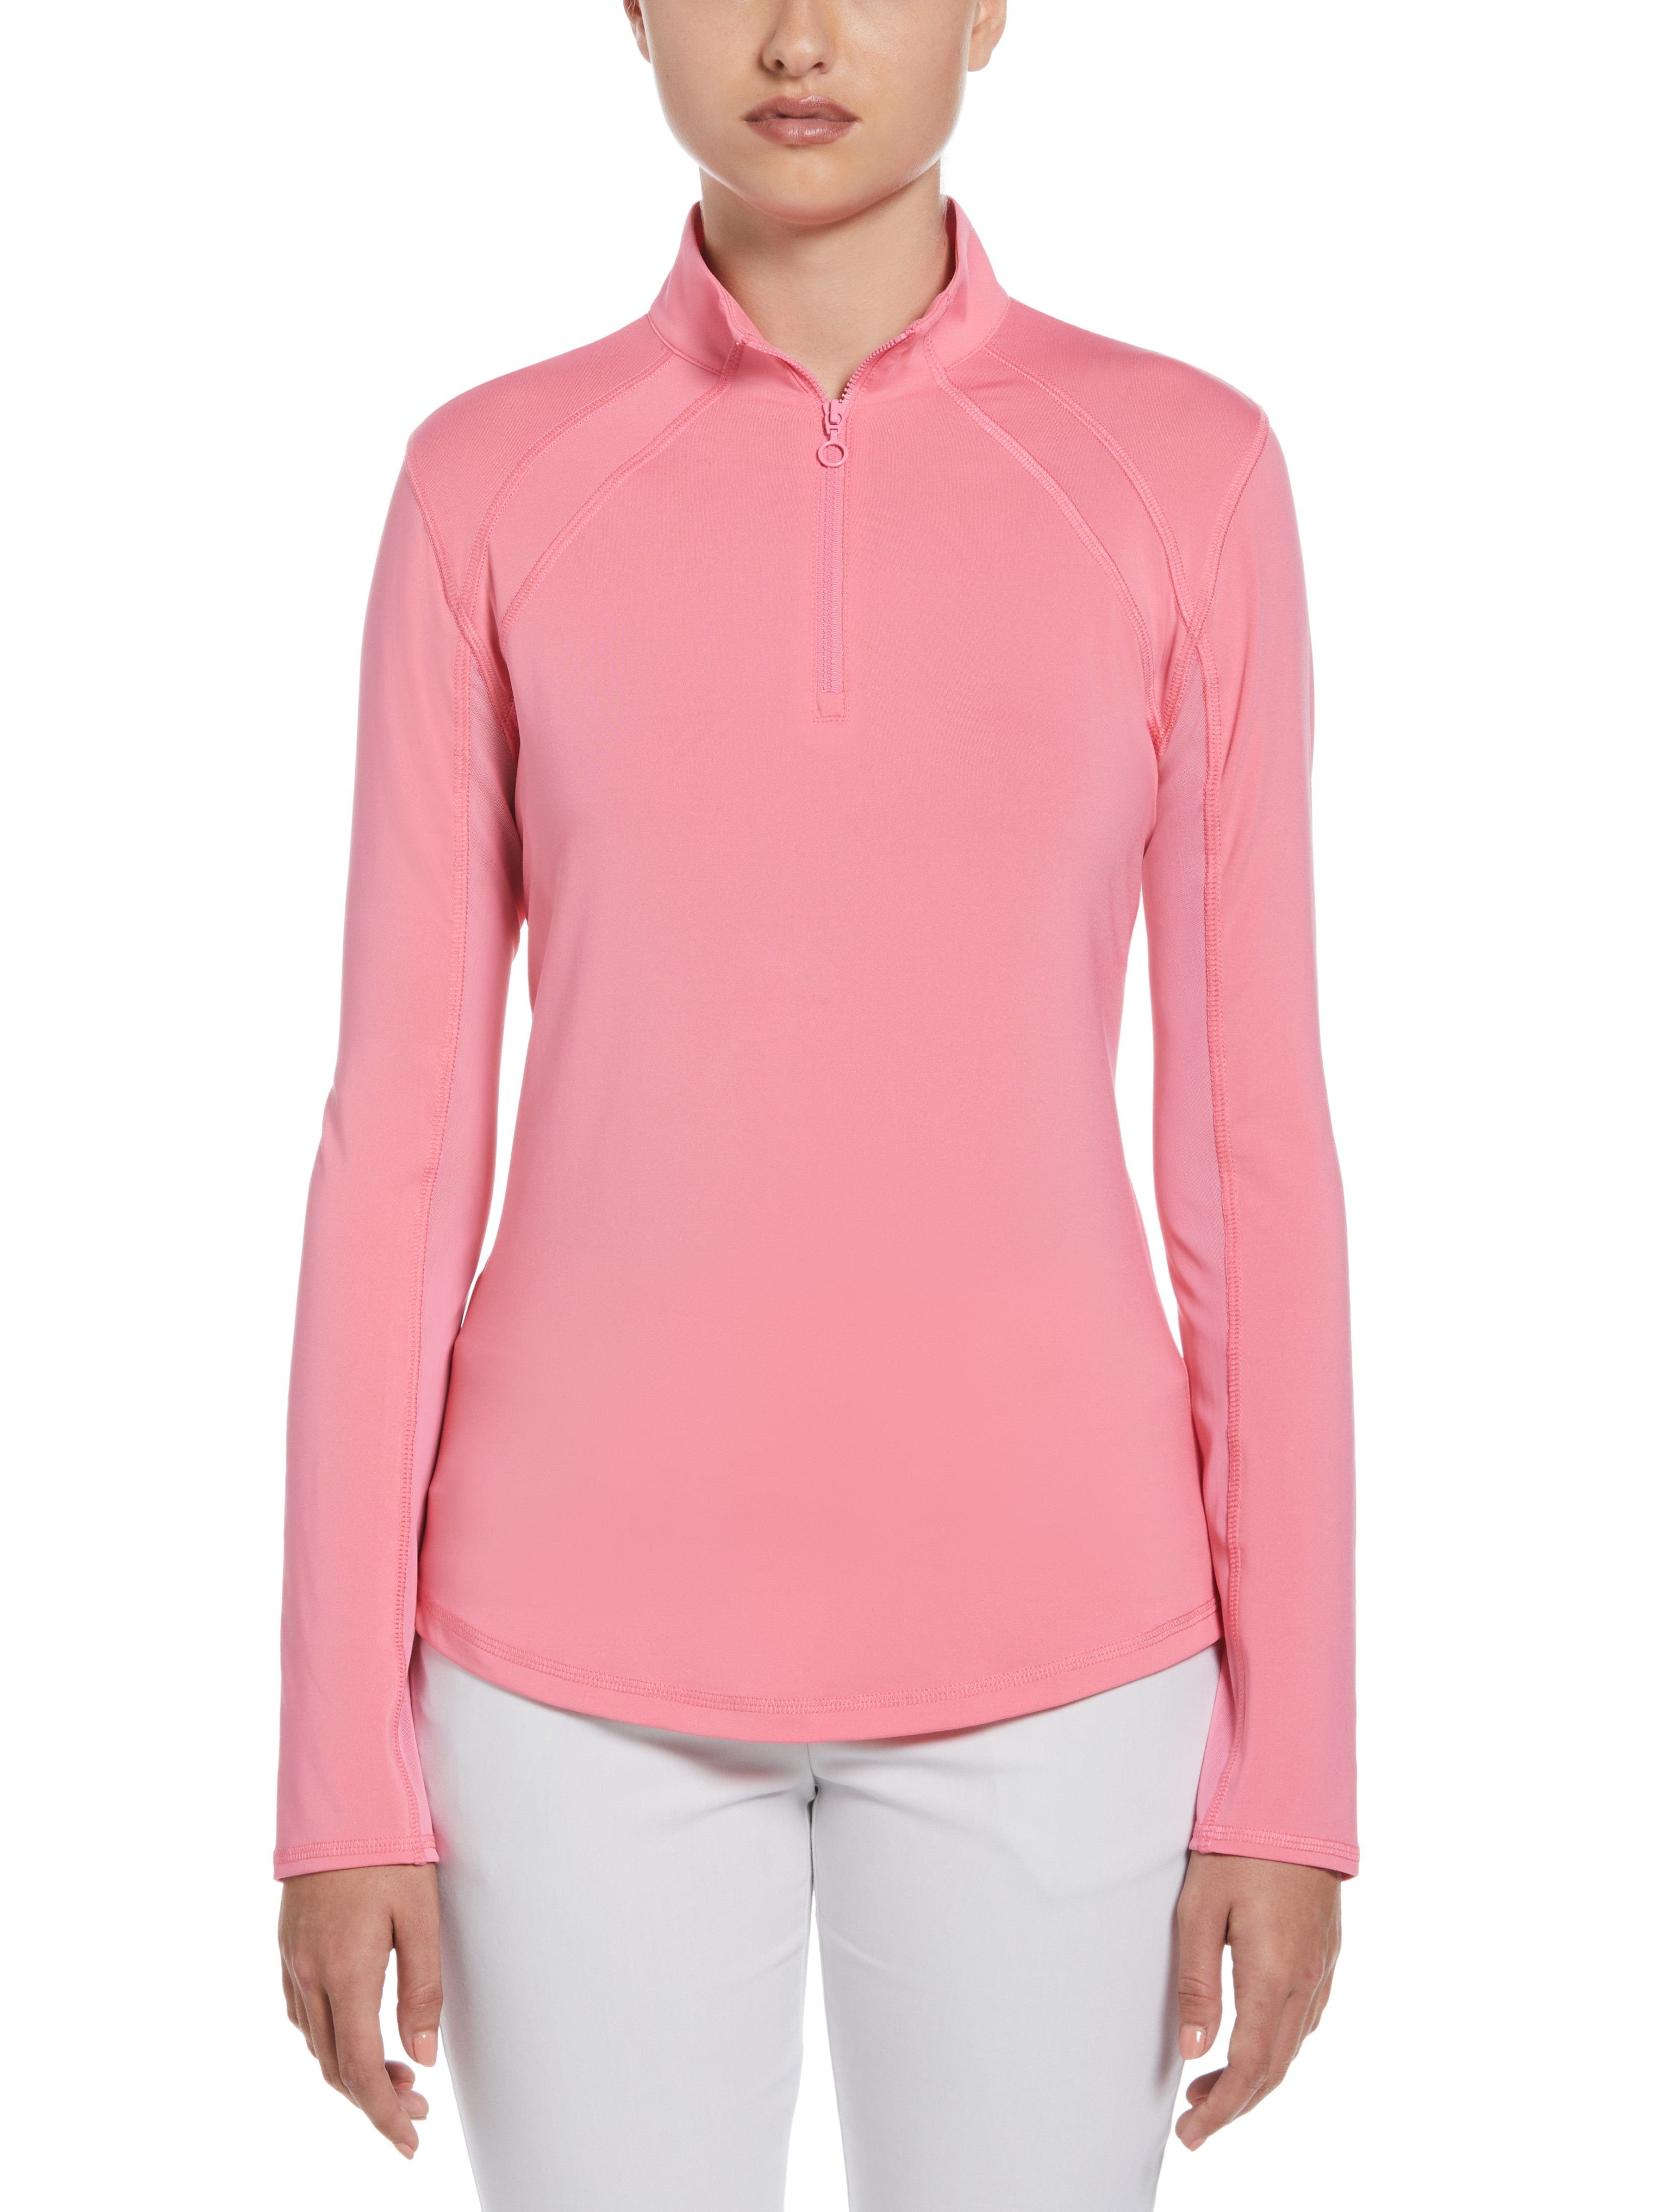 PGA TOUR Apparel Womens Sun Protection Golf Shirt w/ Mesh Panels, Size XL, Flowering Ginger Pink, Polyester/Spandex | Golf Apparel Shop